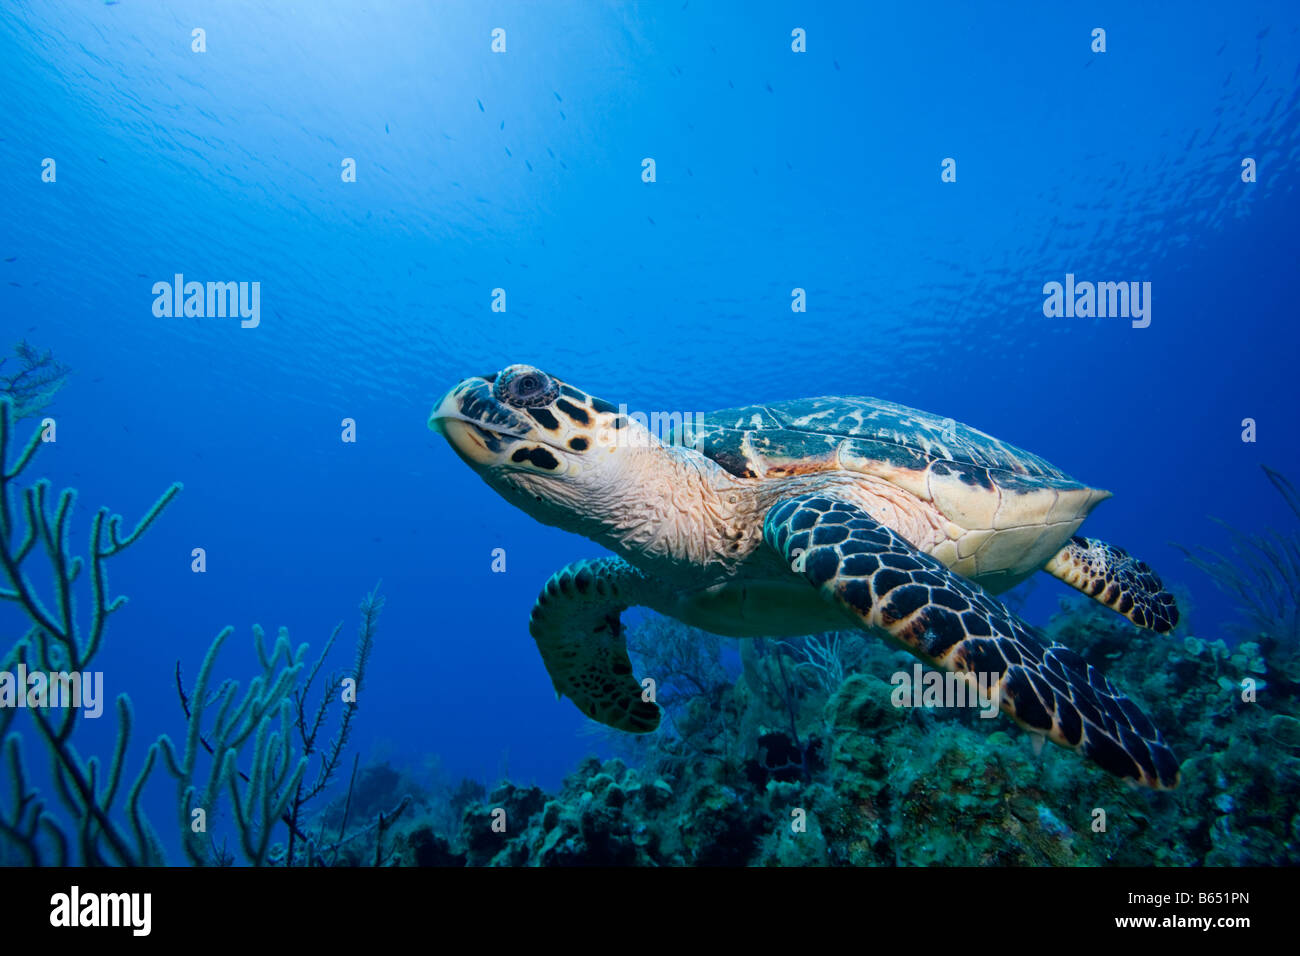 Cayman Islands Little Cayman Island Underwater view of Hawksbill Turtle Stock Photo